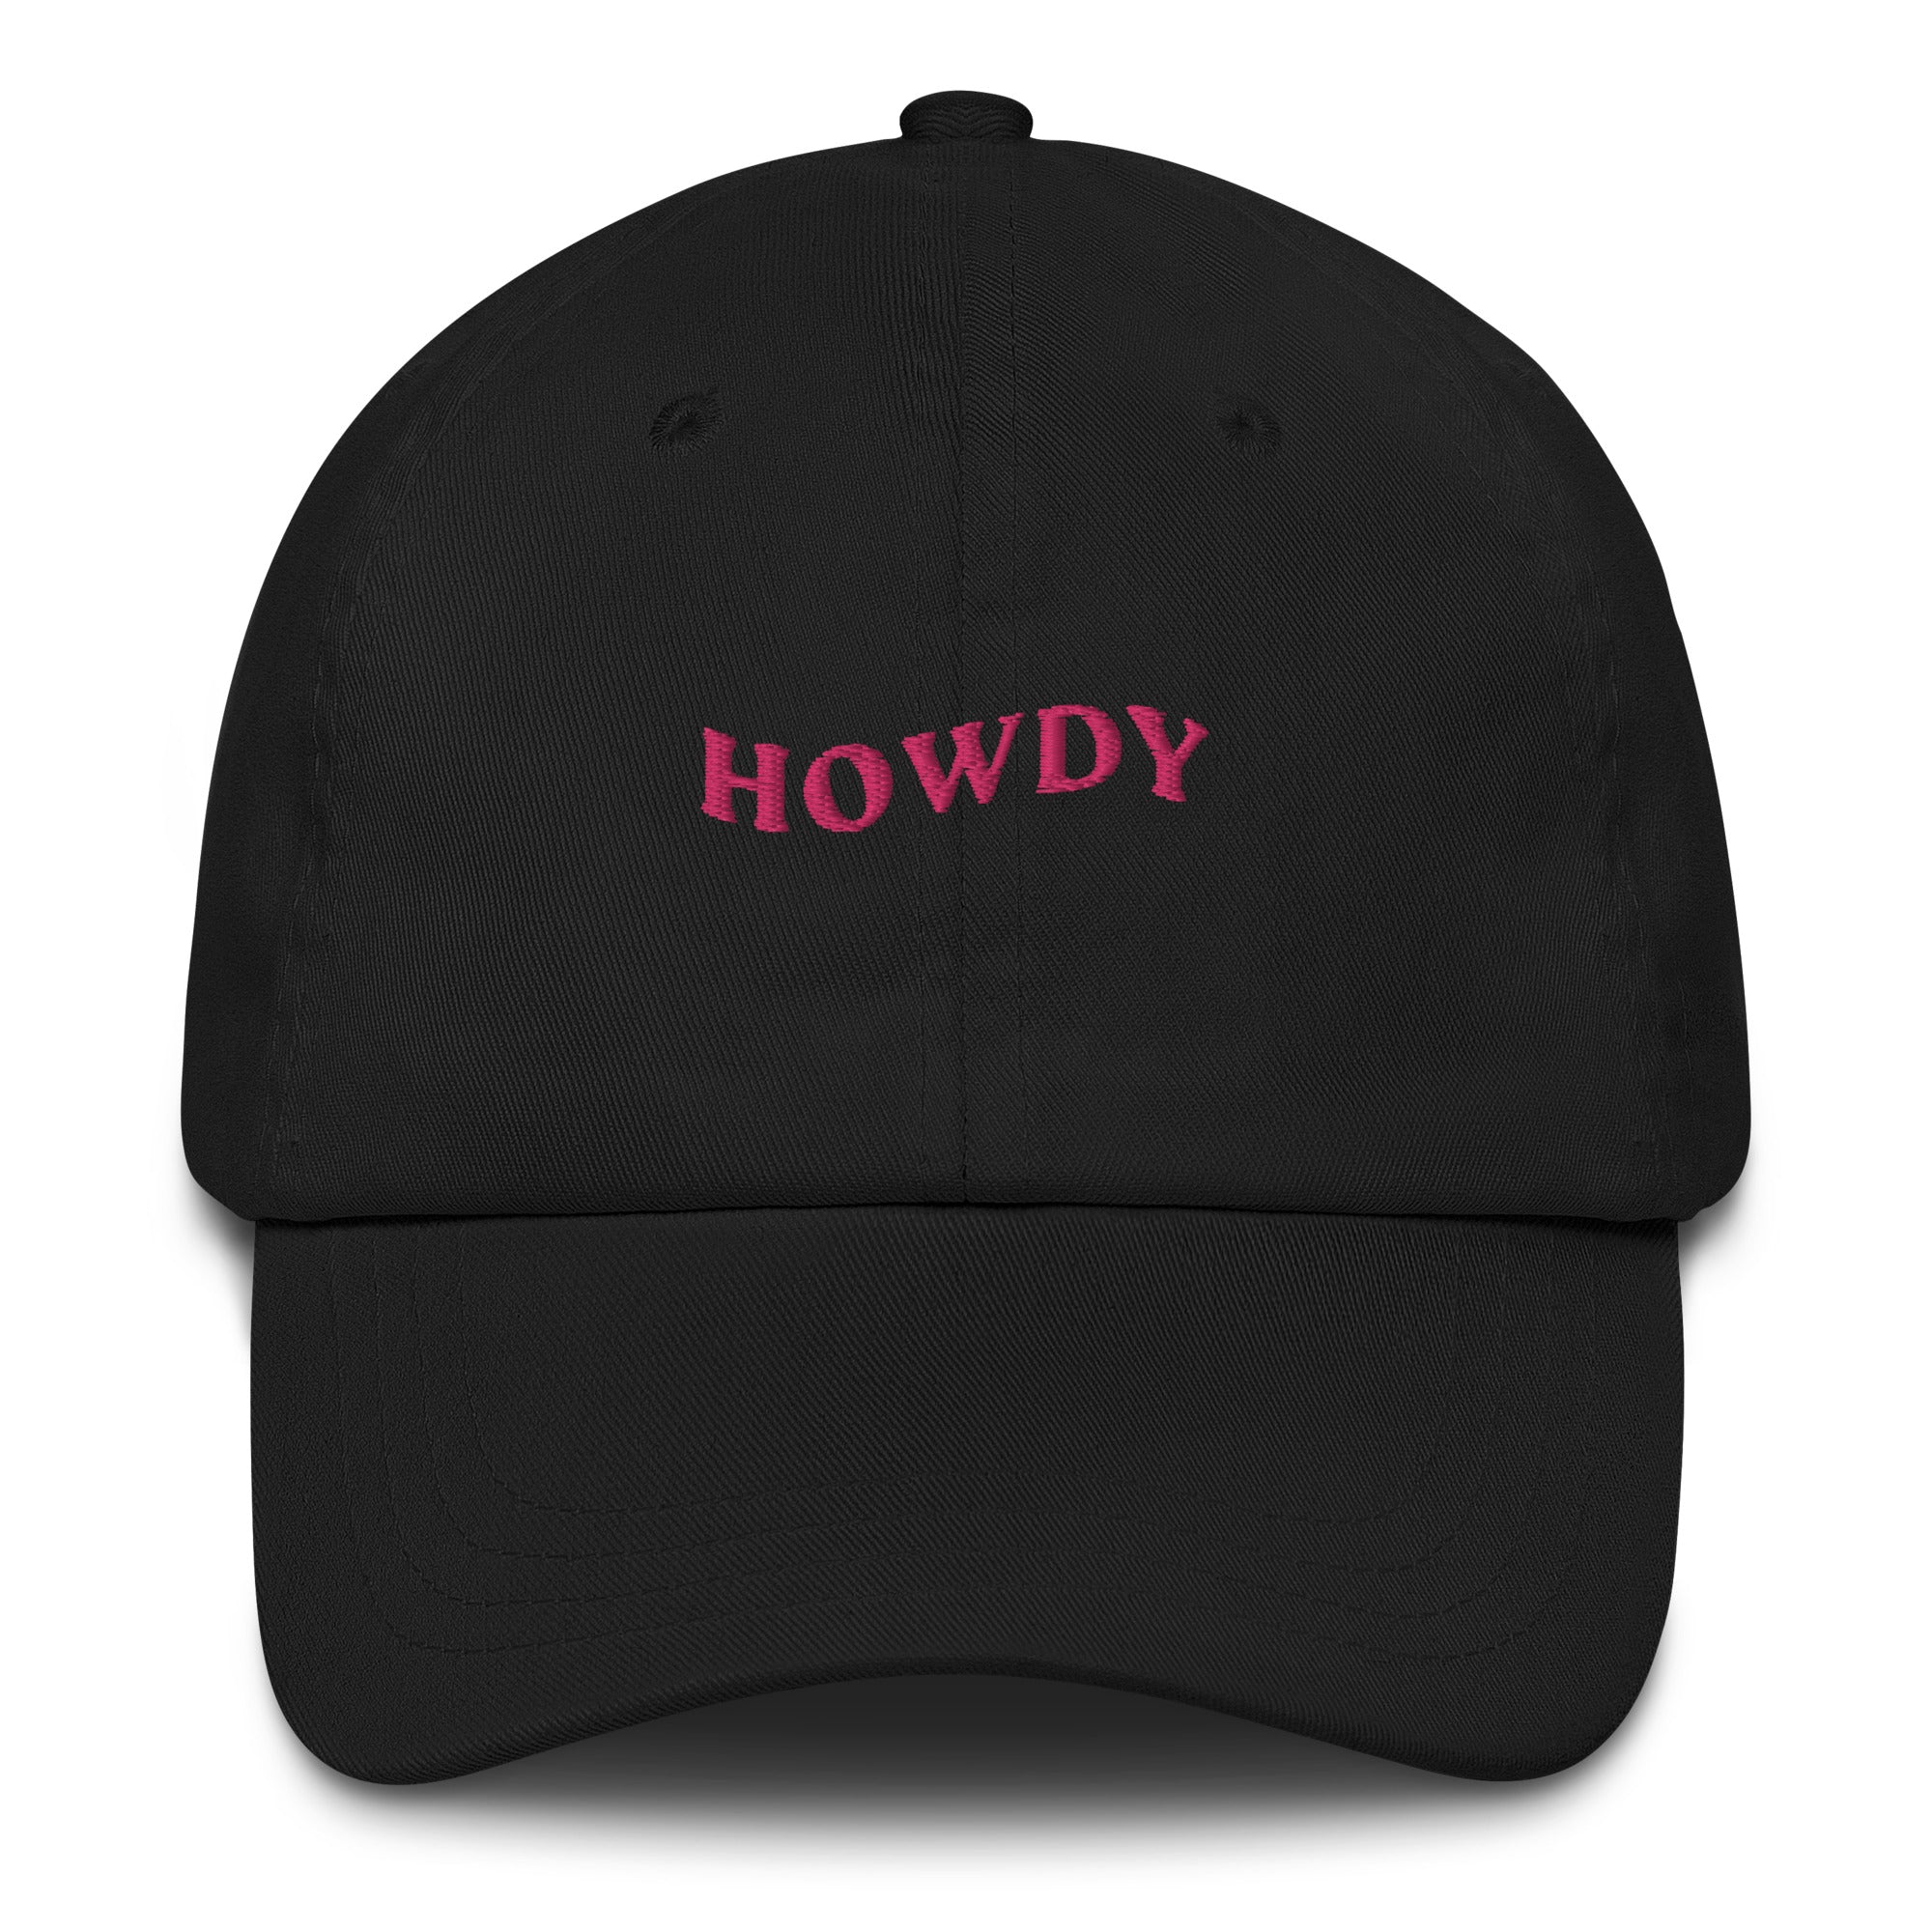 Howdy - Cap